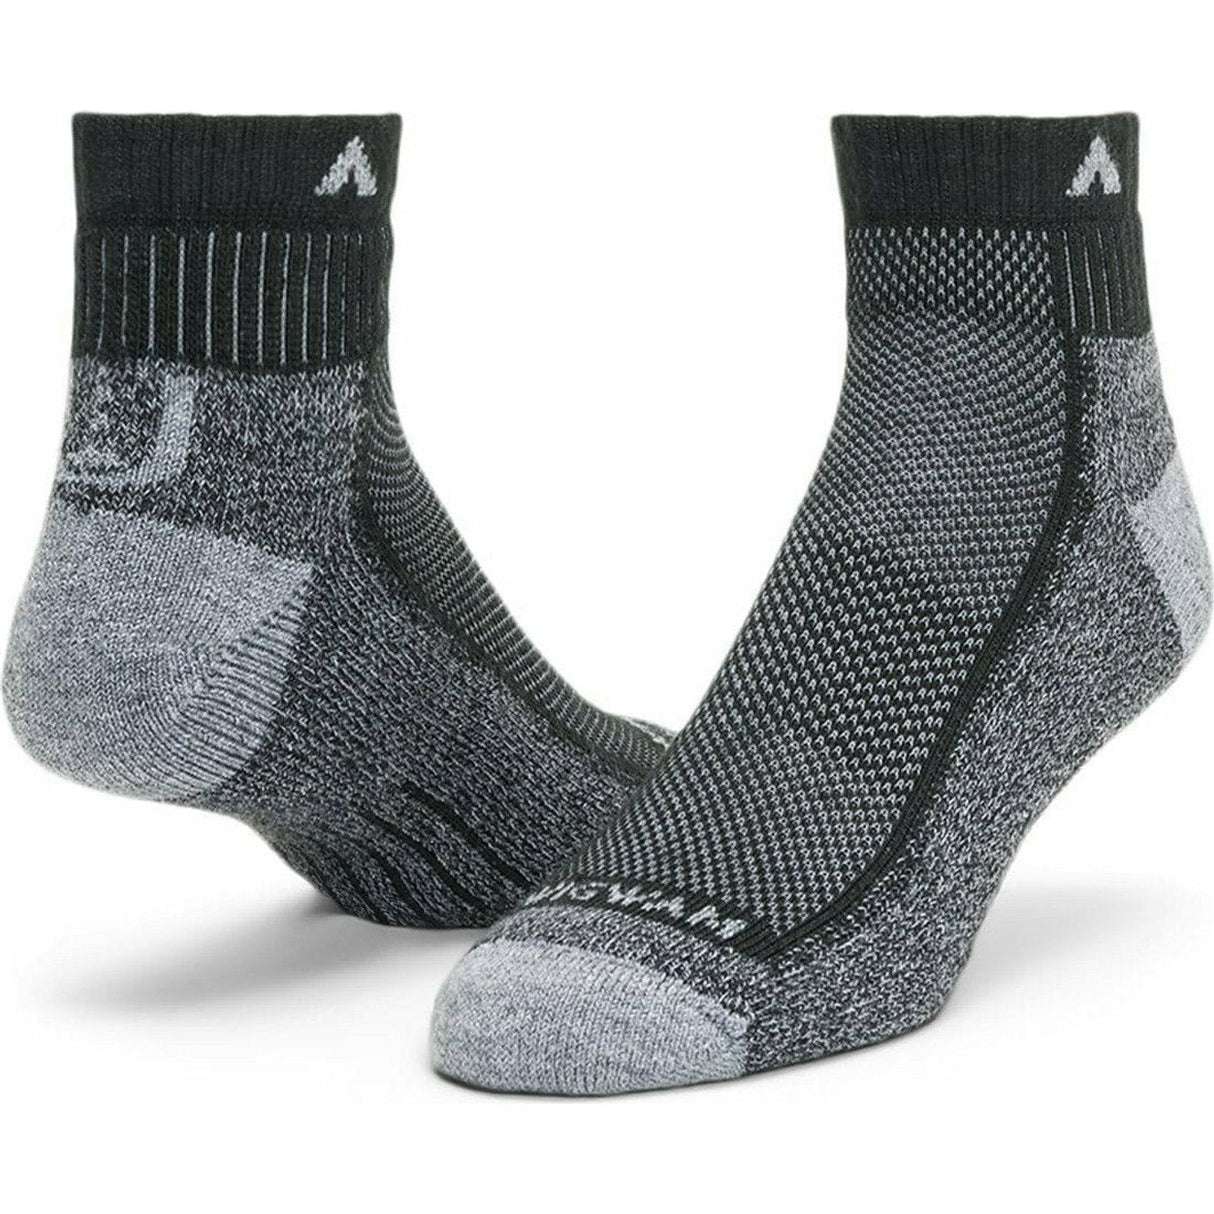 Wigwam Cool-Lite Hiker Quarter Midweight Socks  -  Large / Black/Gray